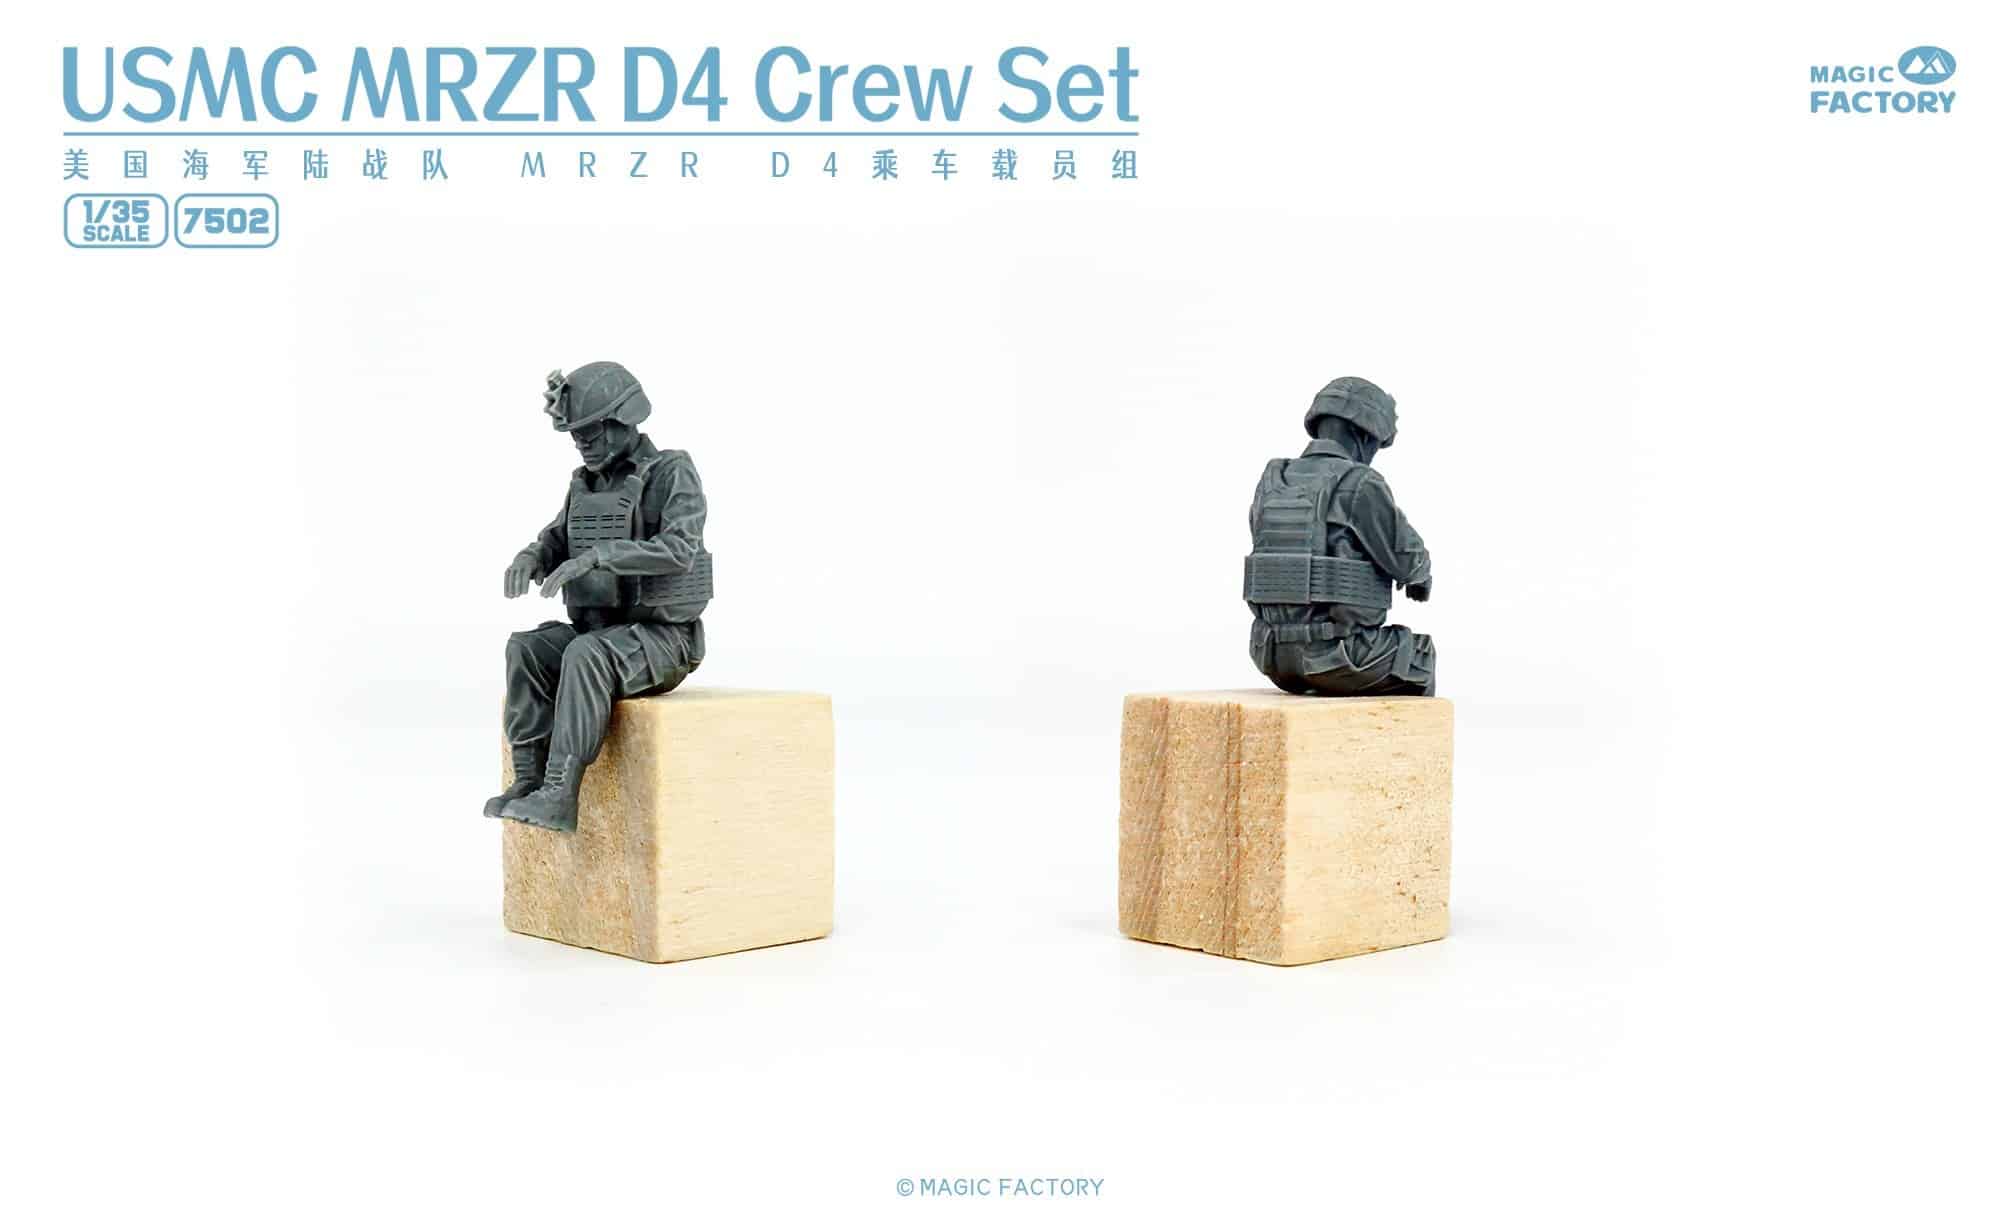 New USMC MRZR D4 Crew Set Available from Magic Factory-7